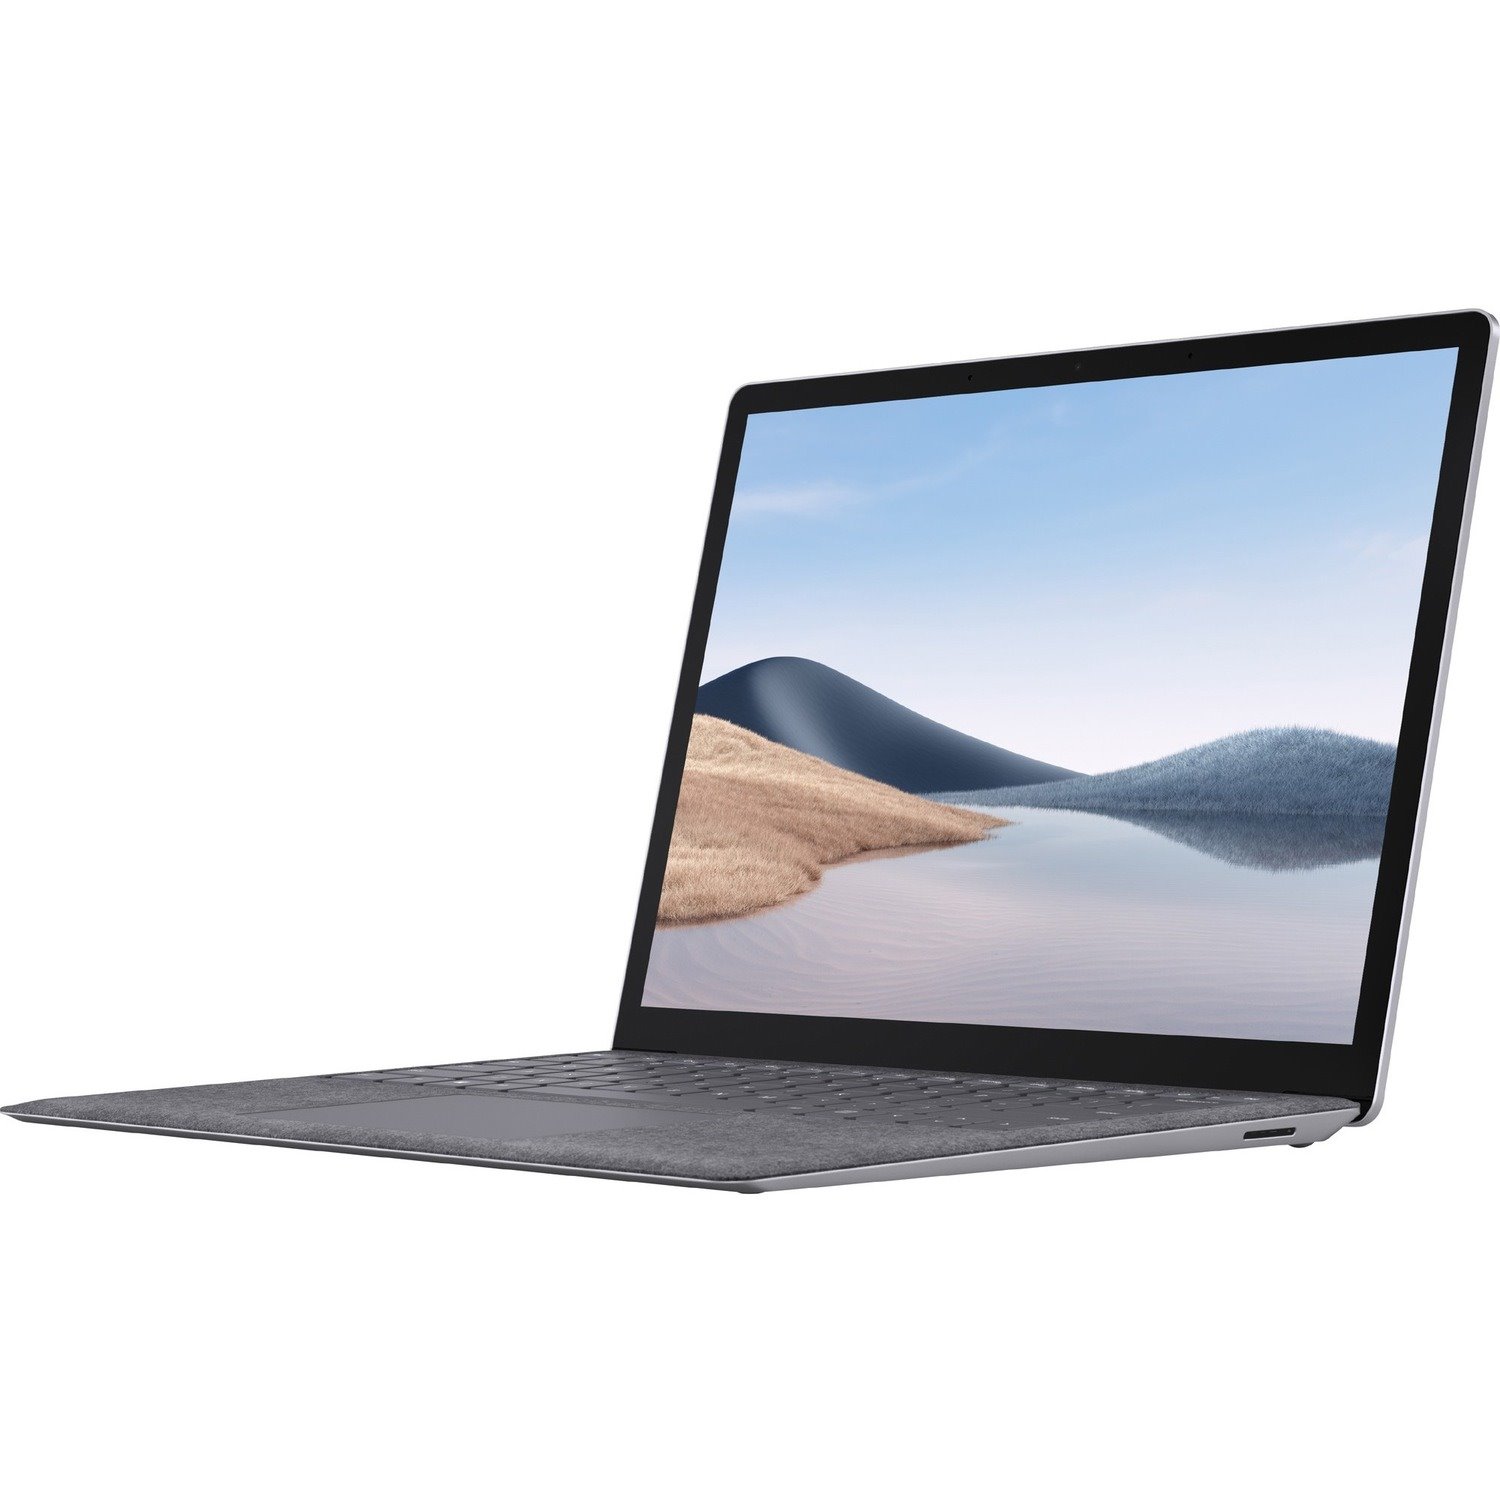 Microsoft Surface Laptop 4 34.3 cm (13.5") Touchscreen Notebook - 2256 x 1504 - Intel Core i5 - 8 GB Total RAM - 256 GB SSD - Platinum